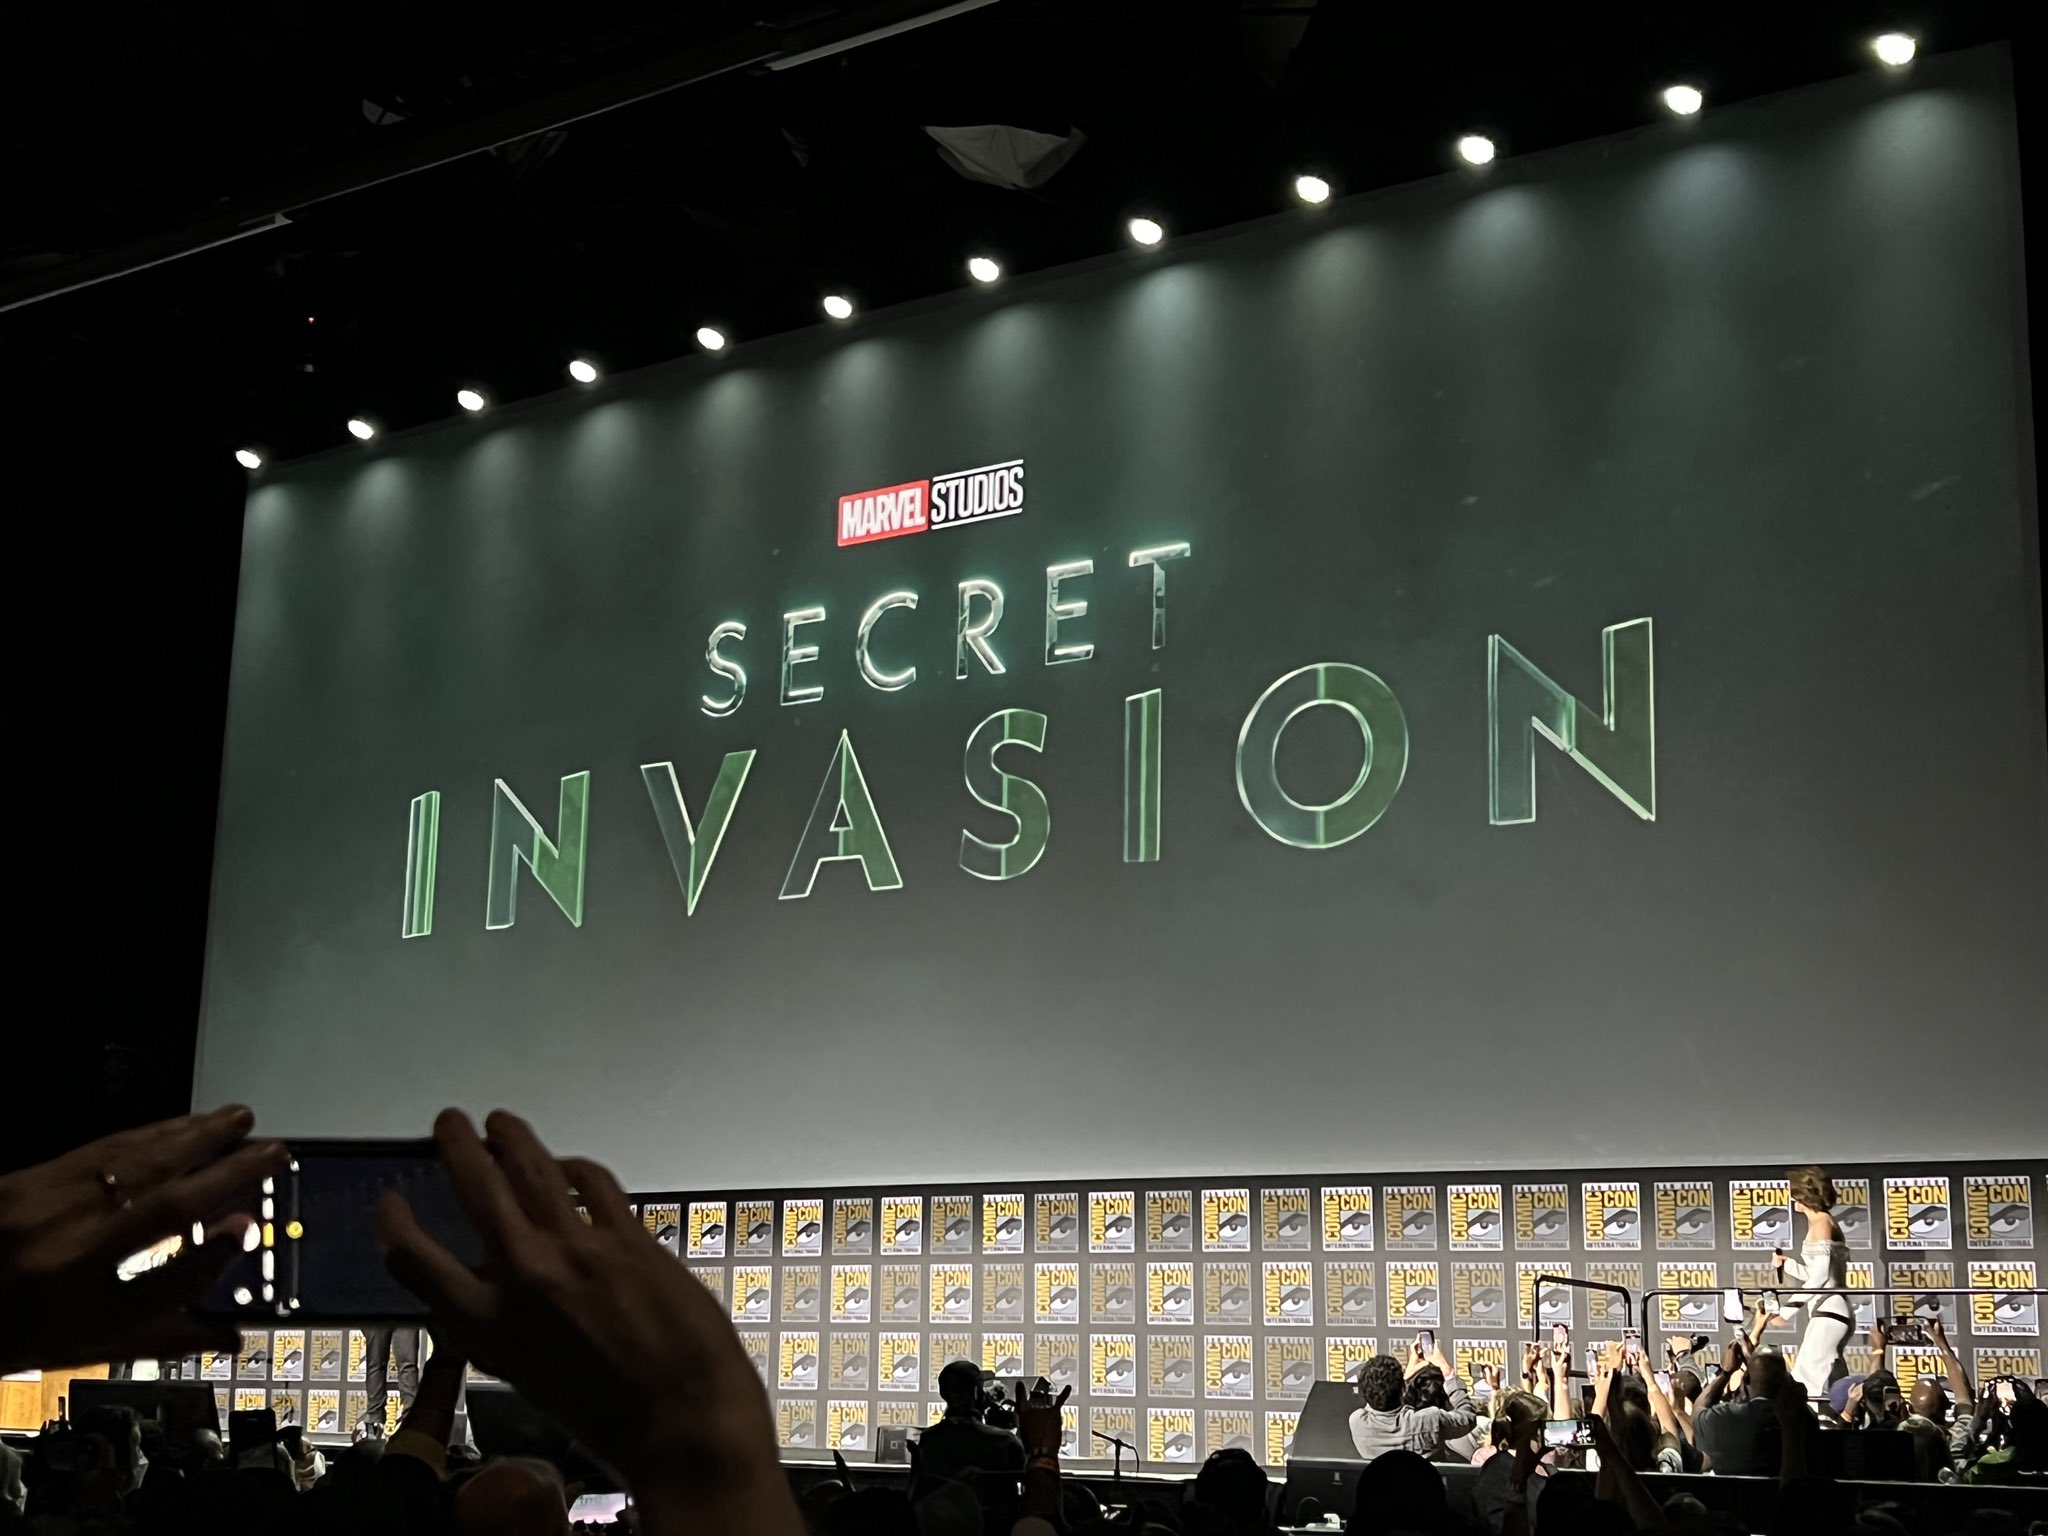 Cobie Smulders on Marvel's Secret Invasion Series: 'More Dark in Tone